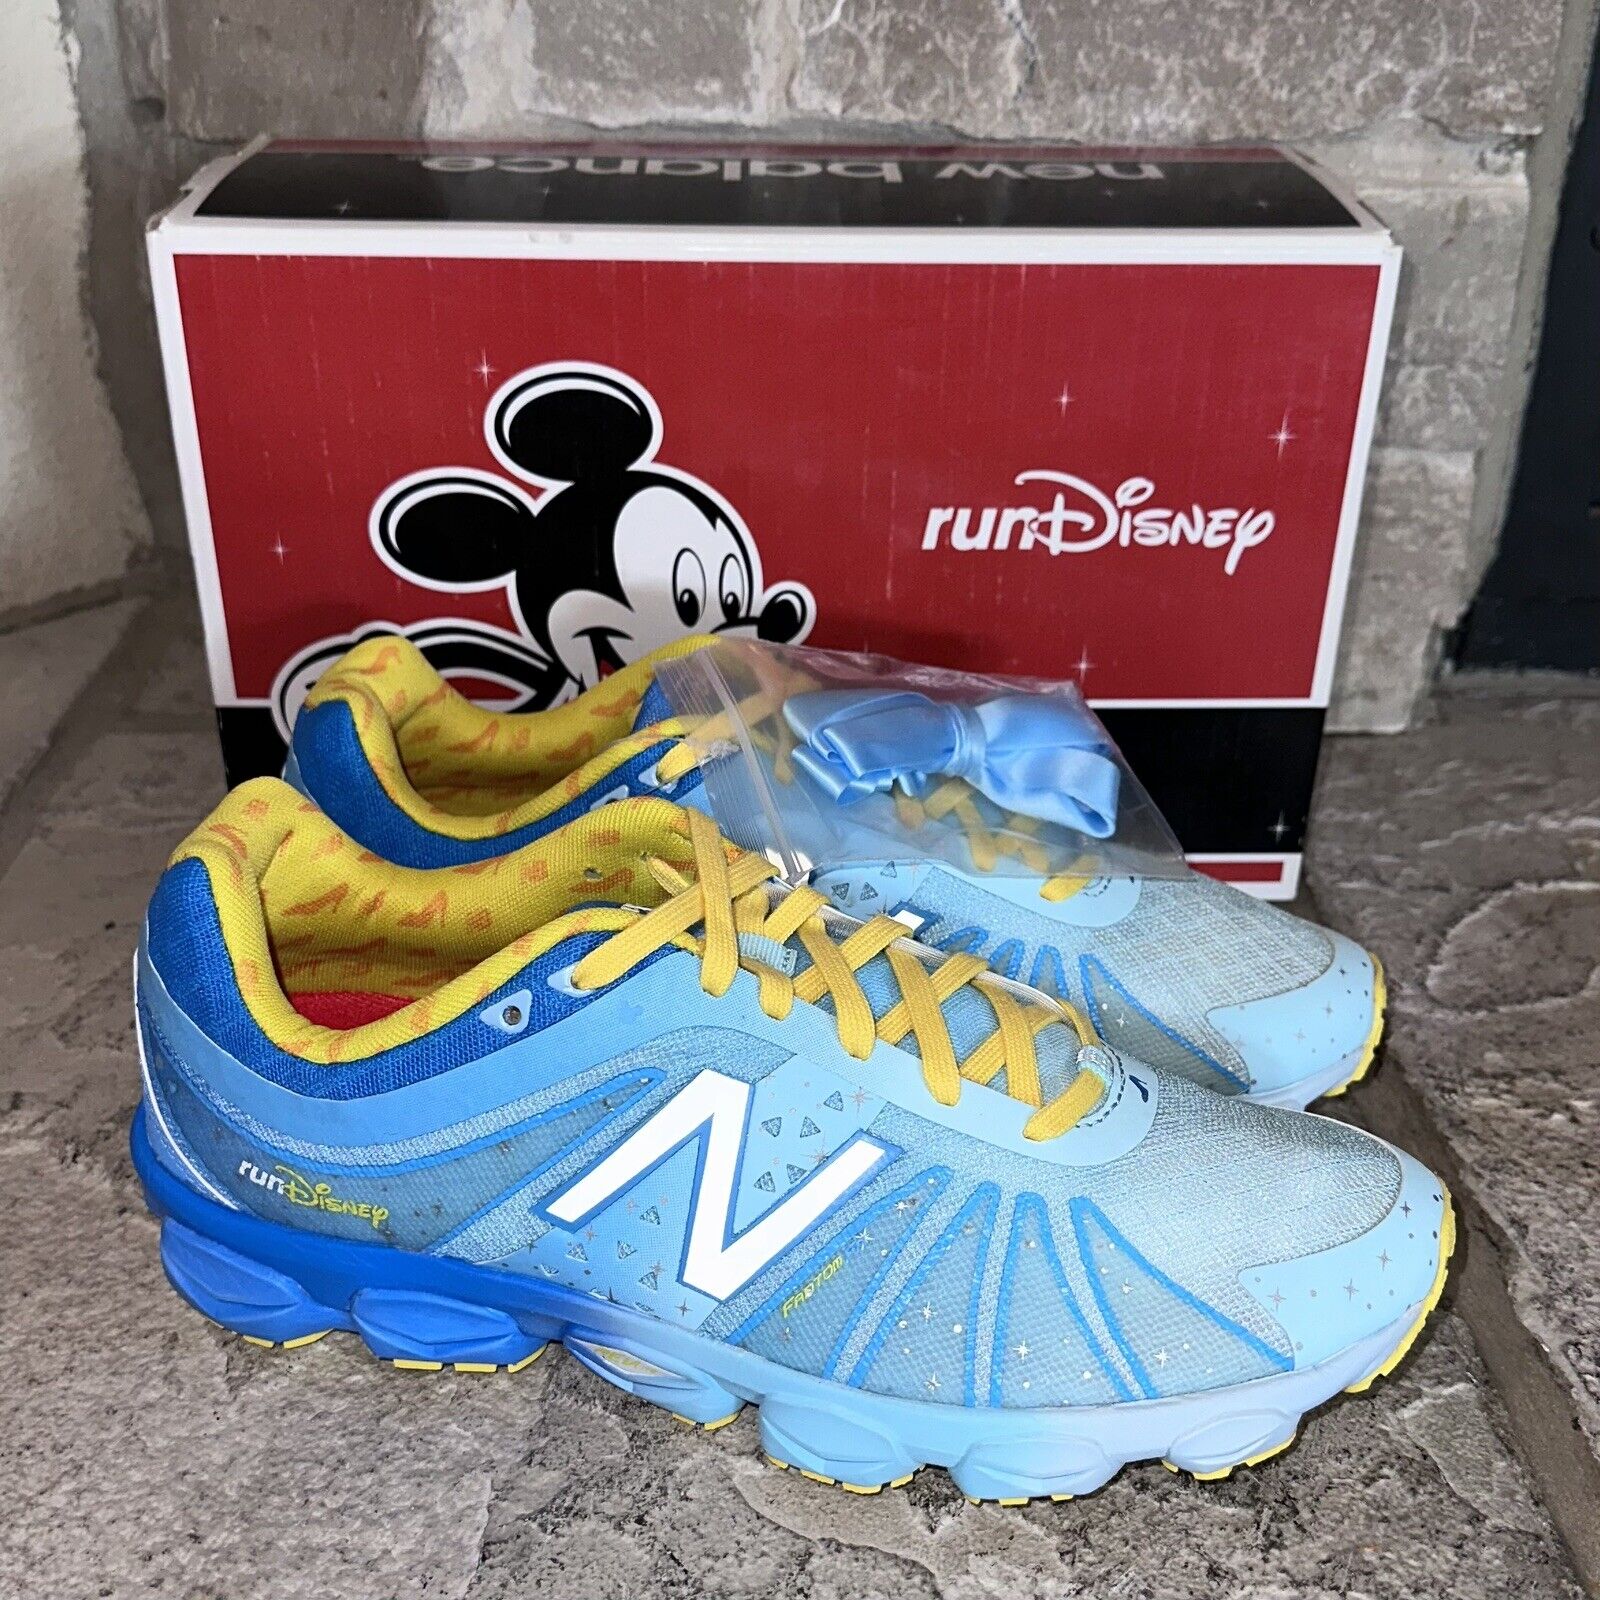 New Balance 890 V4 Run Disney Cinderella 2014 Running Shoes Women’s Size 9